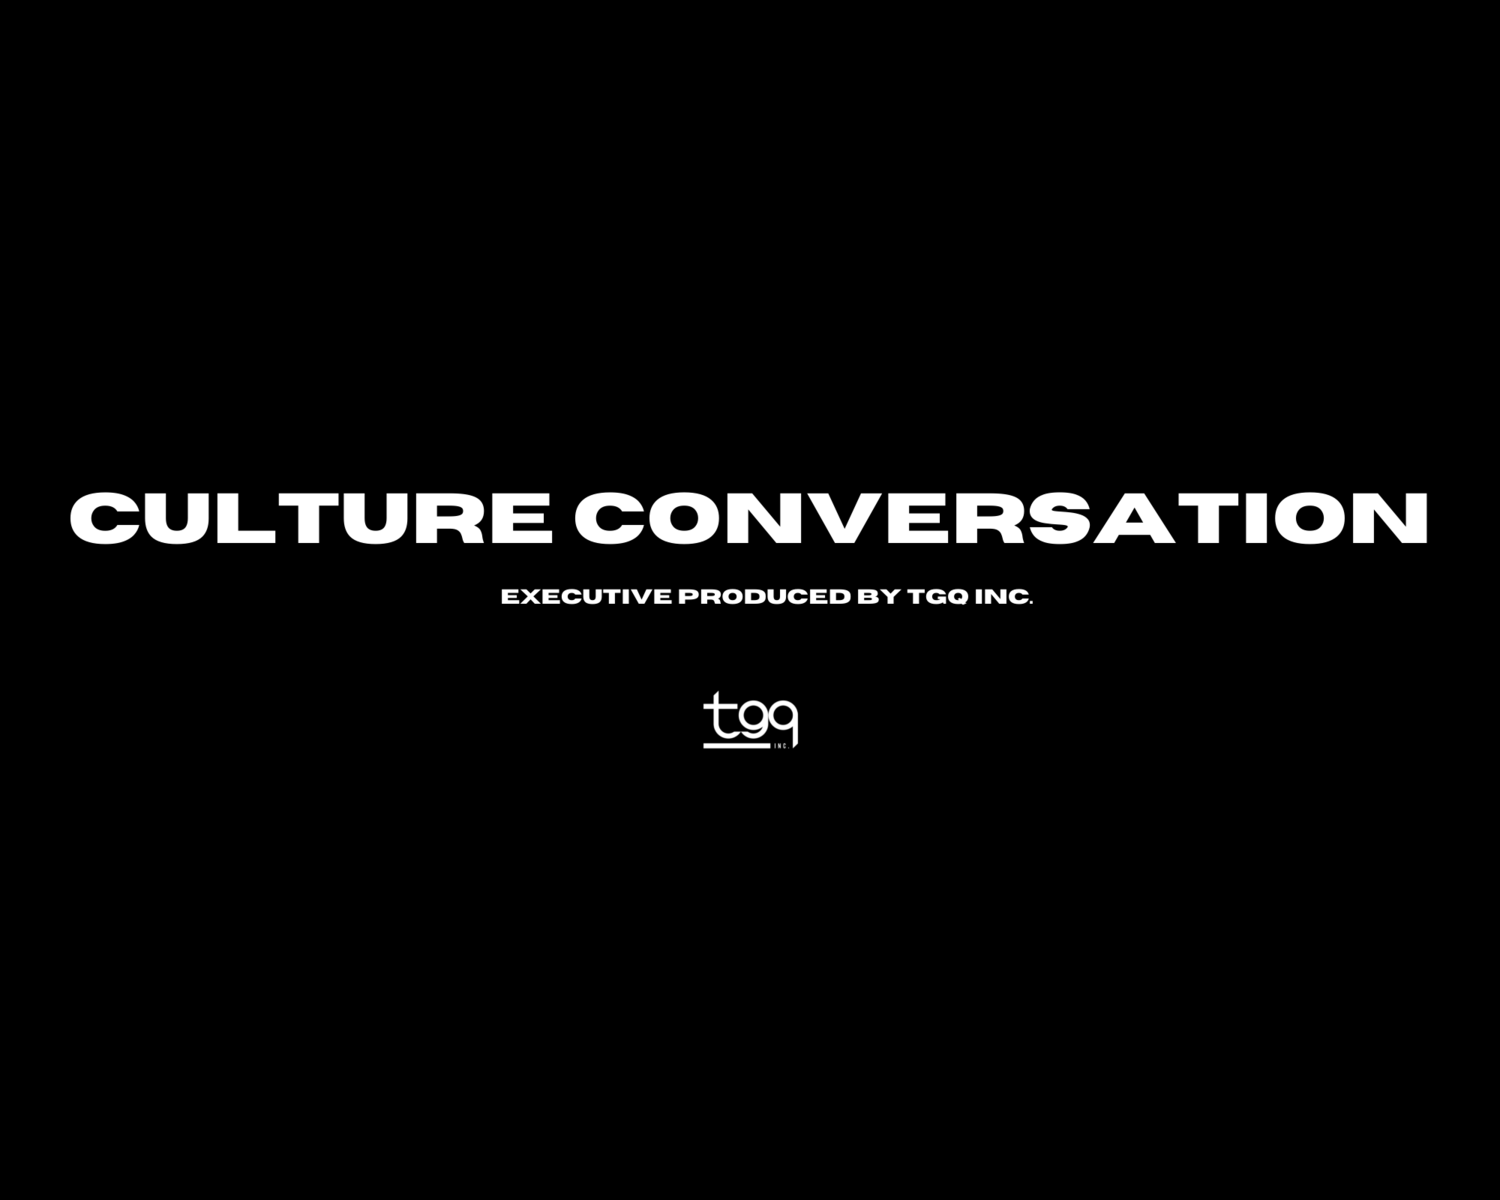 Percakapan Budaya Mengakhiri Musim 3 |  Dari Start-Up hingga Pertunjukan Premium |  TGQ INC.